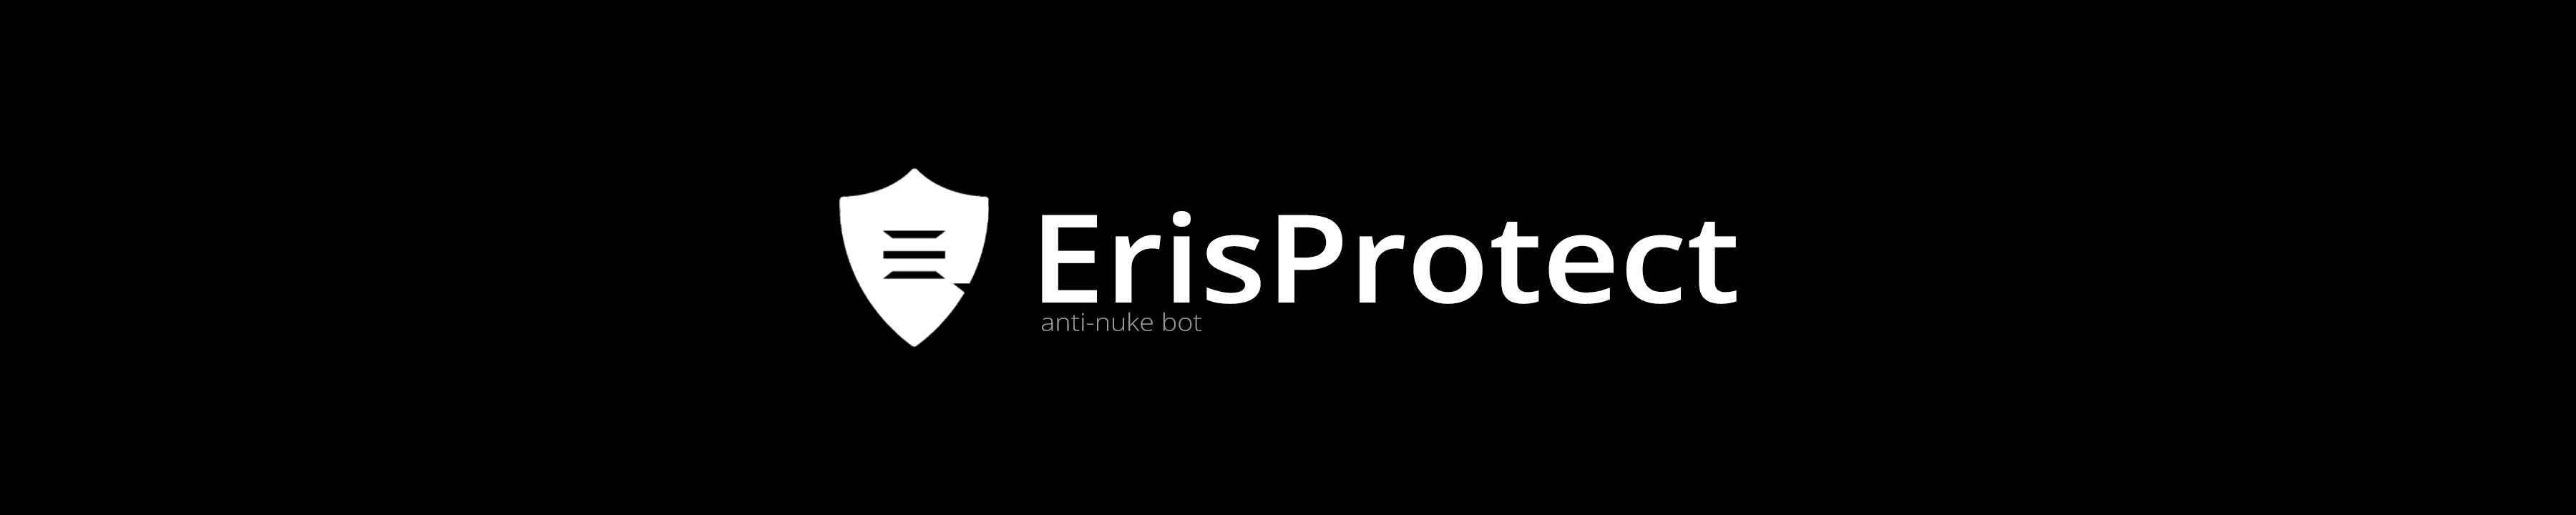 ErisProtect Banner